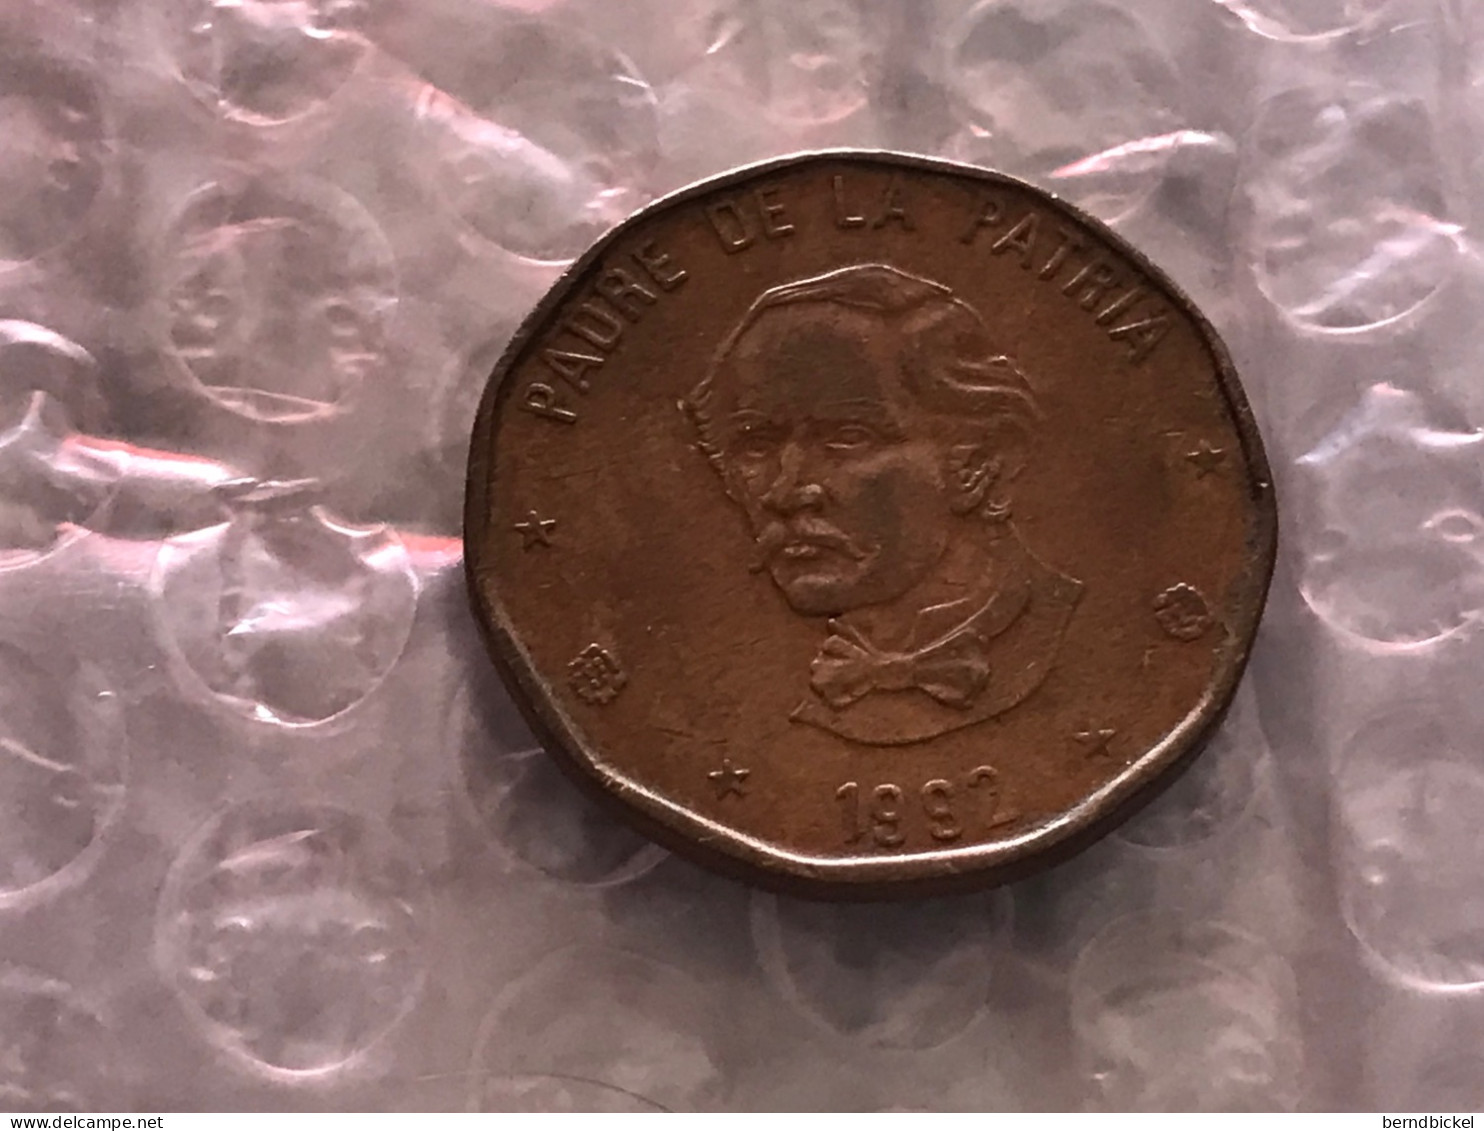 Münze Münzen Umlaufmünze Dominikanische Republik 1 Peso 1992 - Dominicana